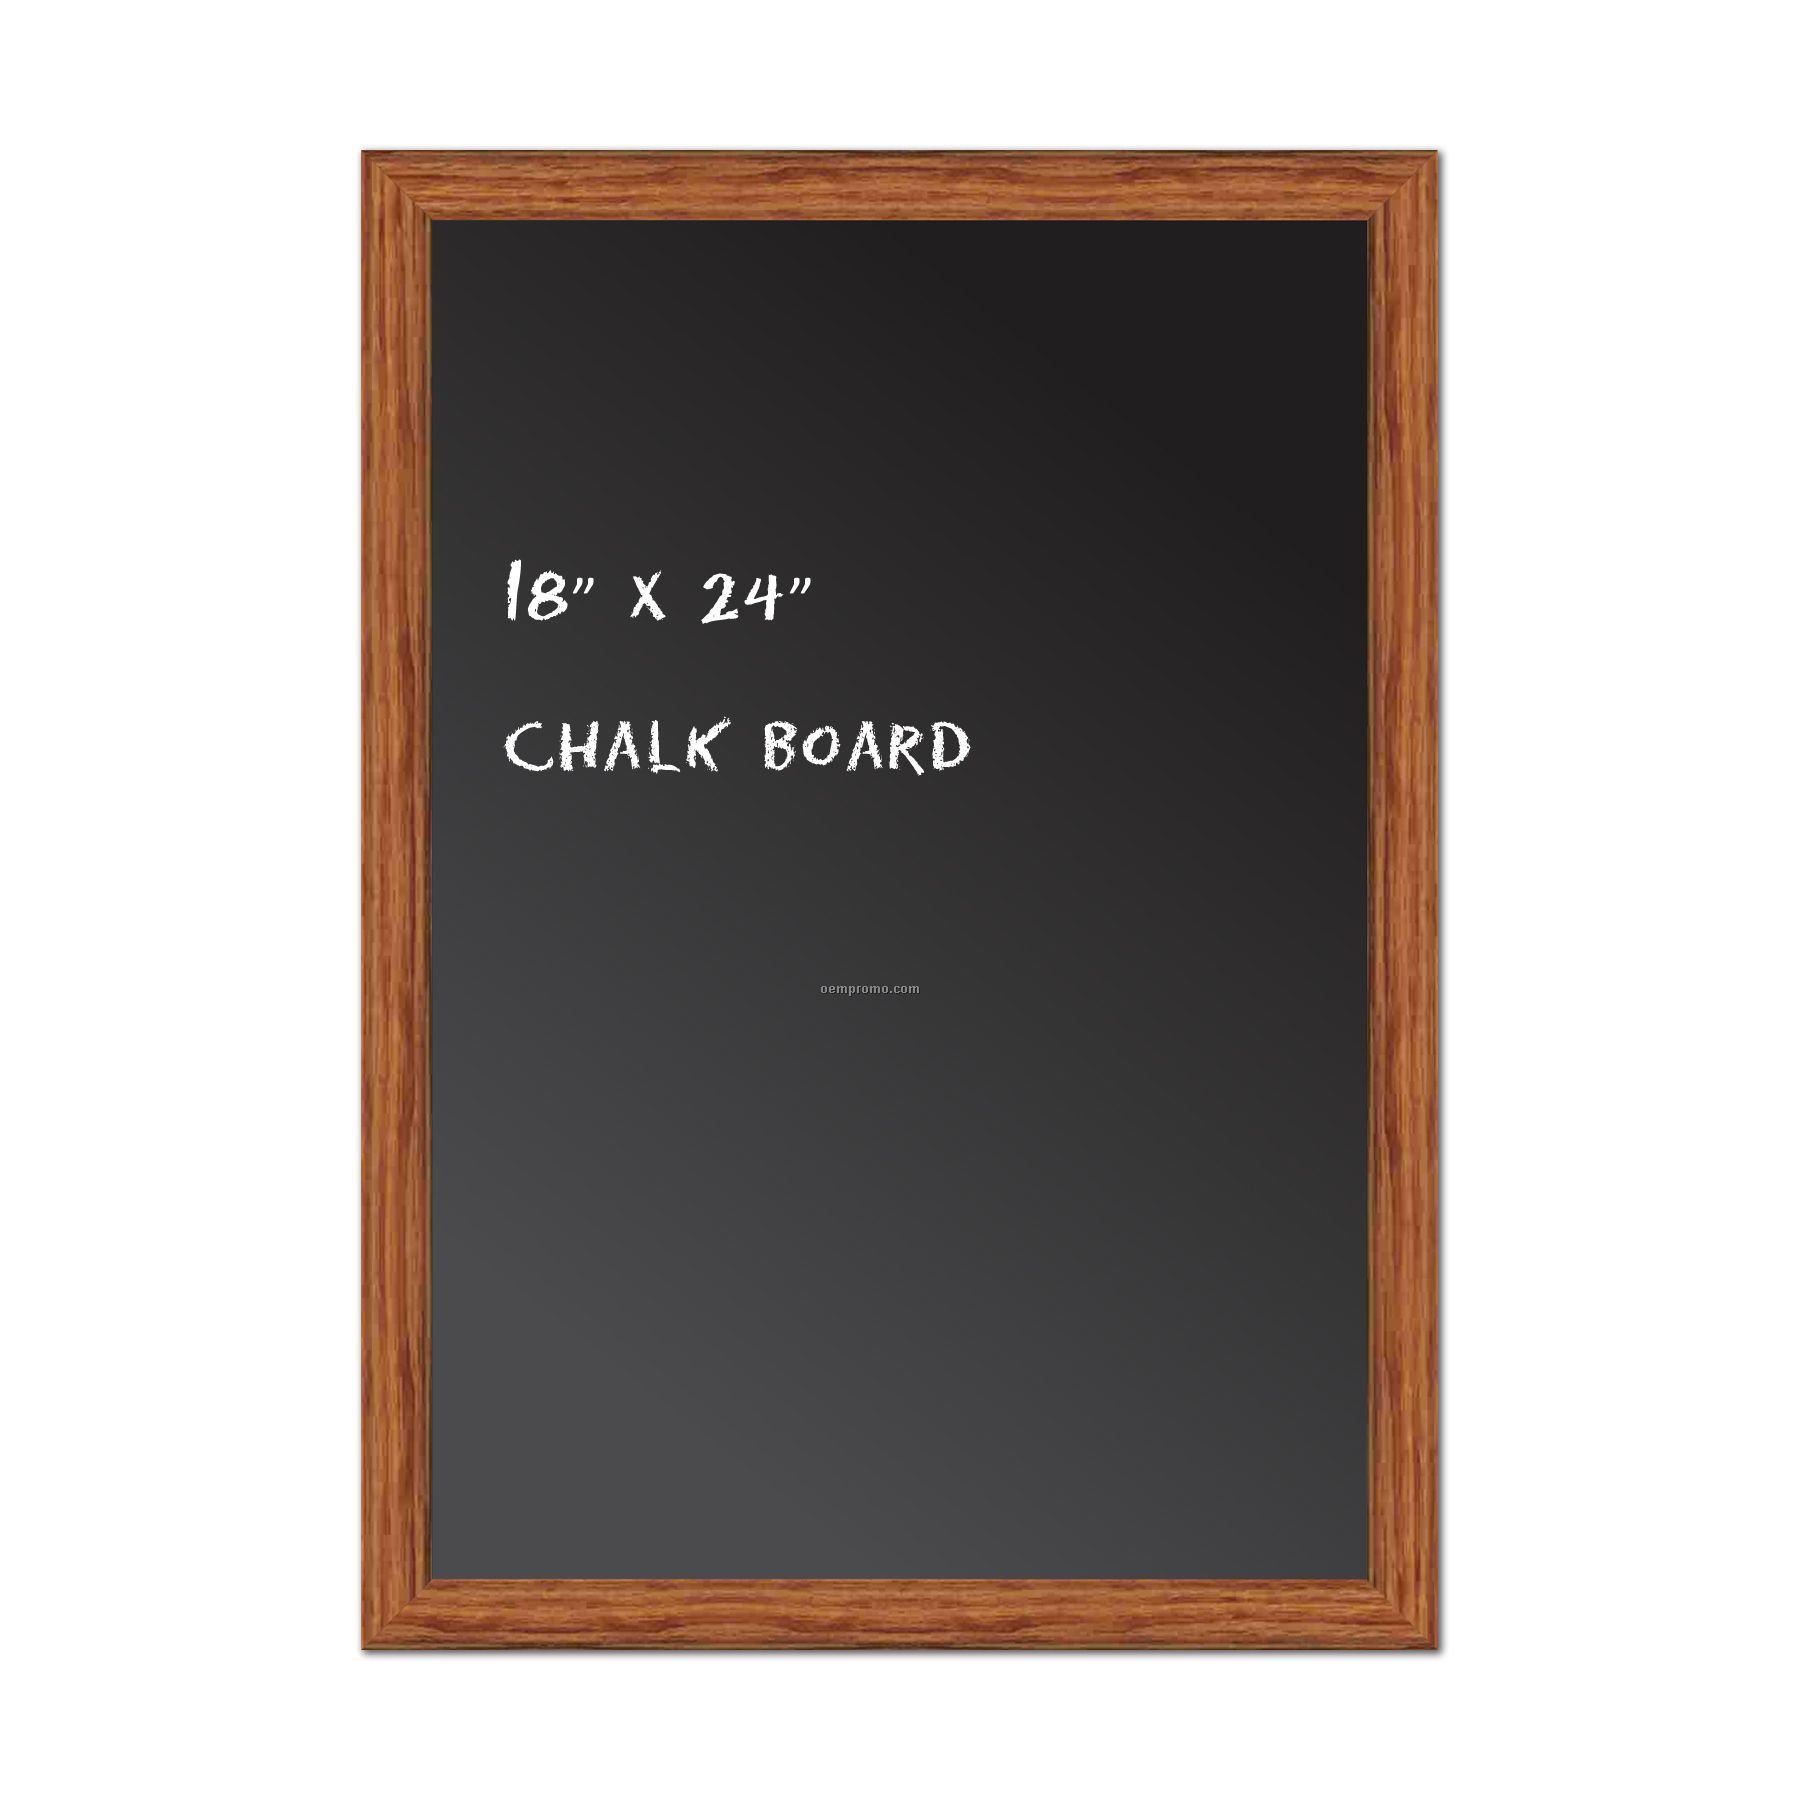 Chalk Board 18" X 24". Real Wood Frame - Honey Oak Finish.